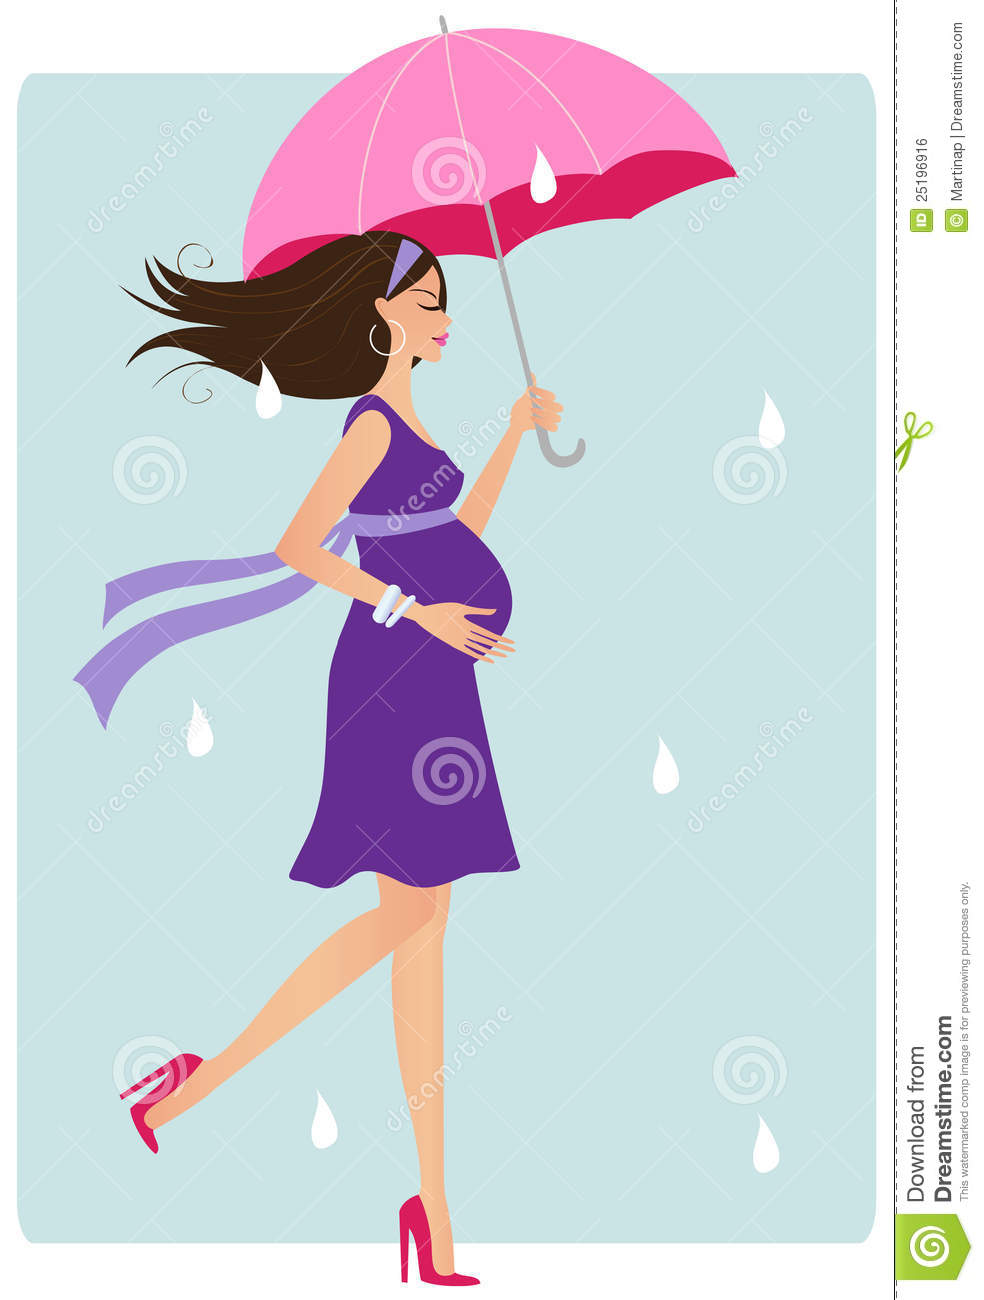 Happy Pregnant Woman Wiht Umbrella Royalty Free Stock Image   Image    